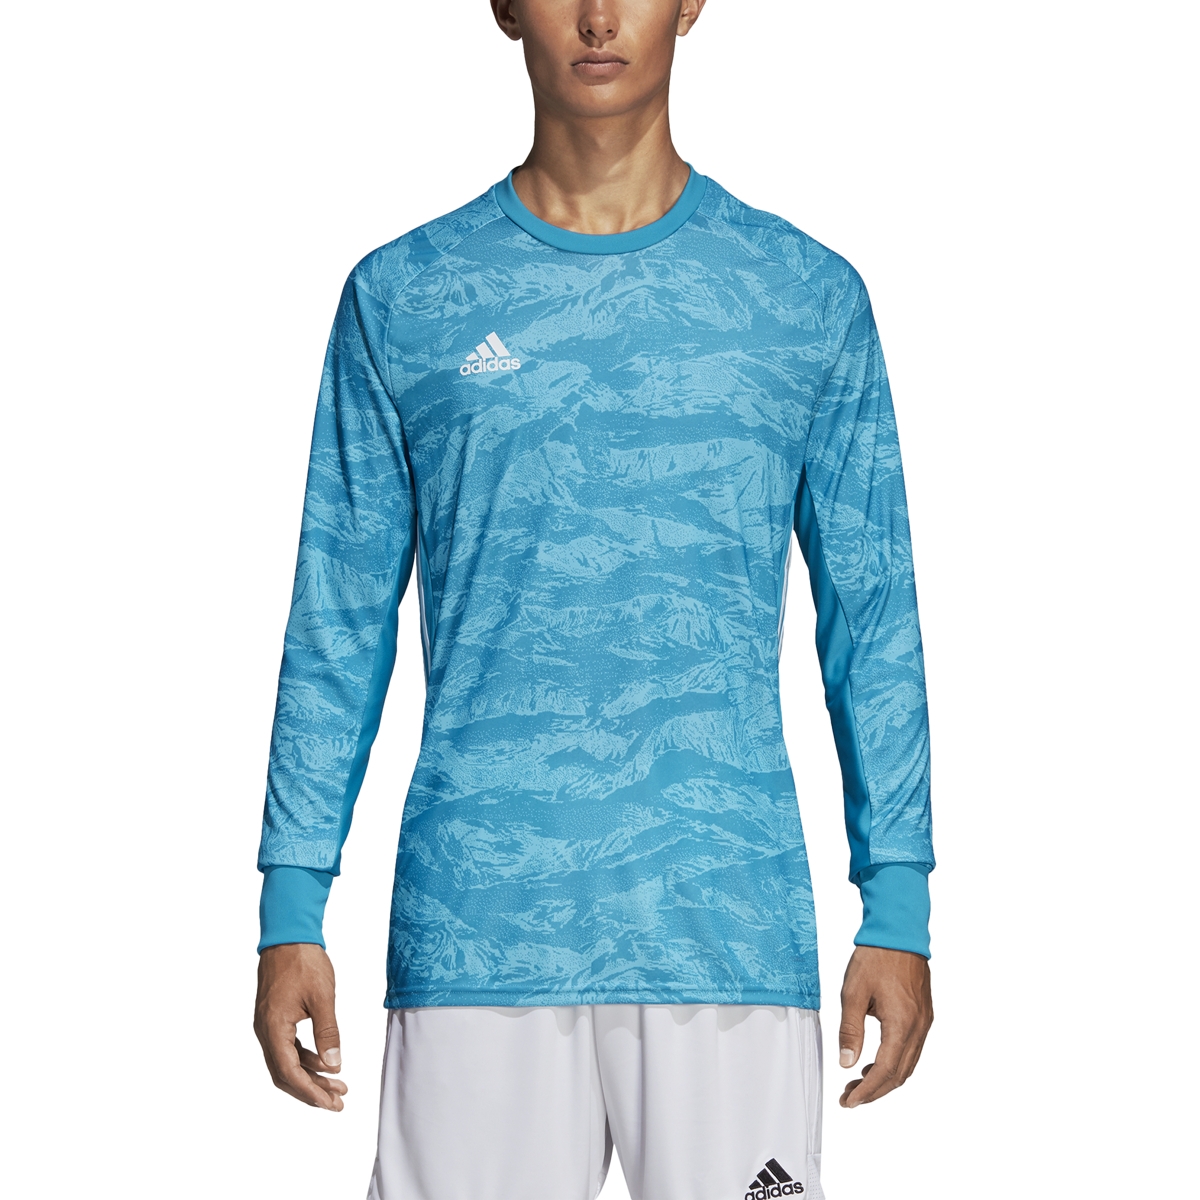 adidas short sleeve goalkeeper jersey